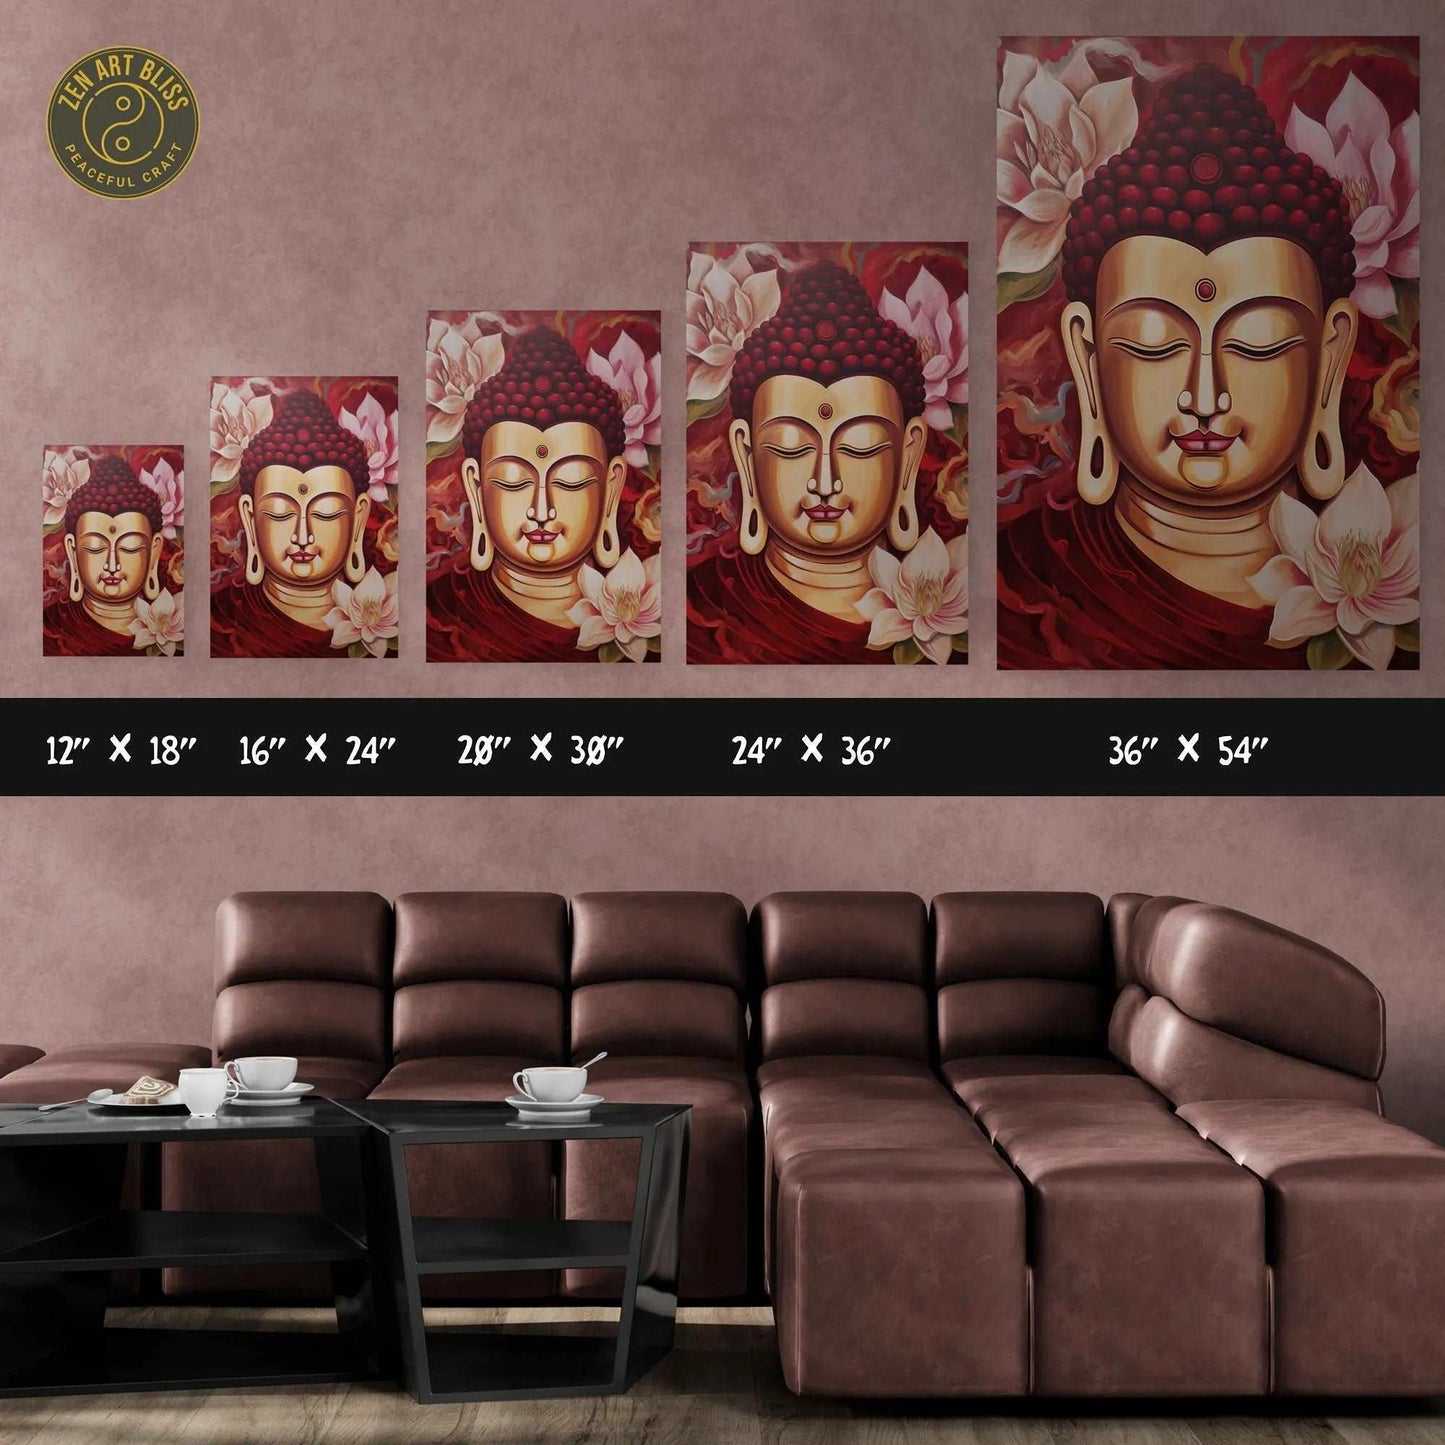 ZenArtBliss.com's sitting buddha print with a lotus flower measurements.